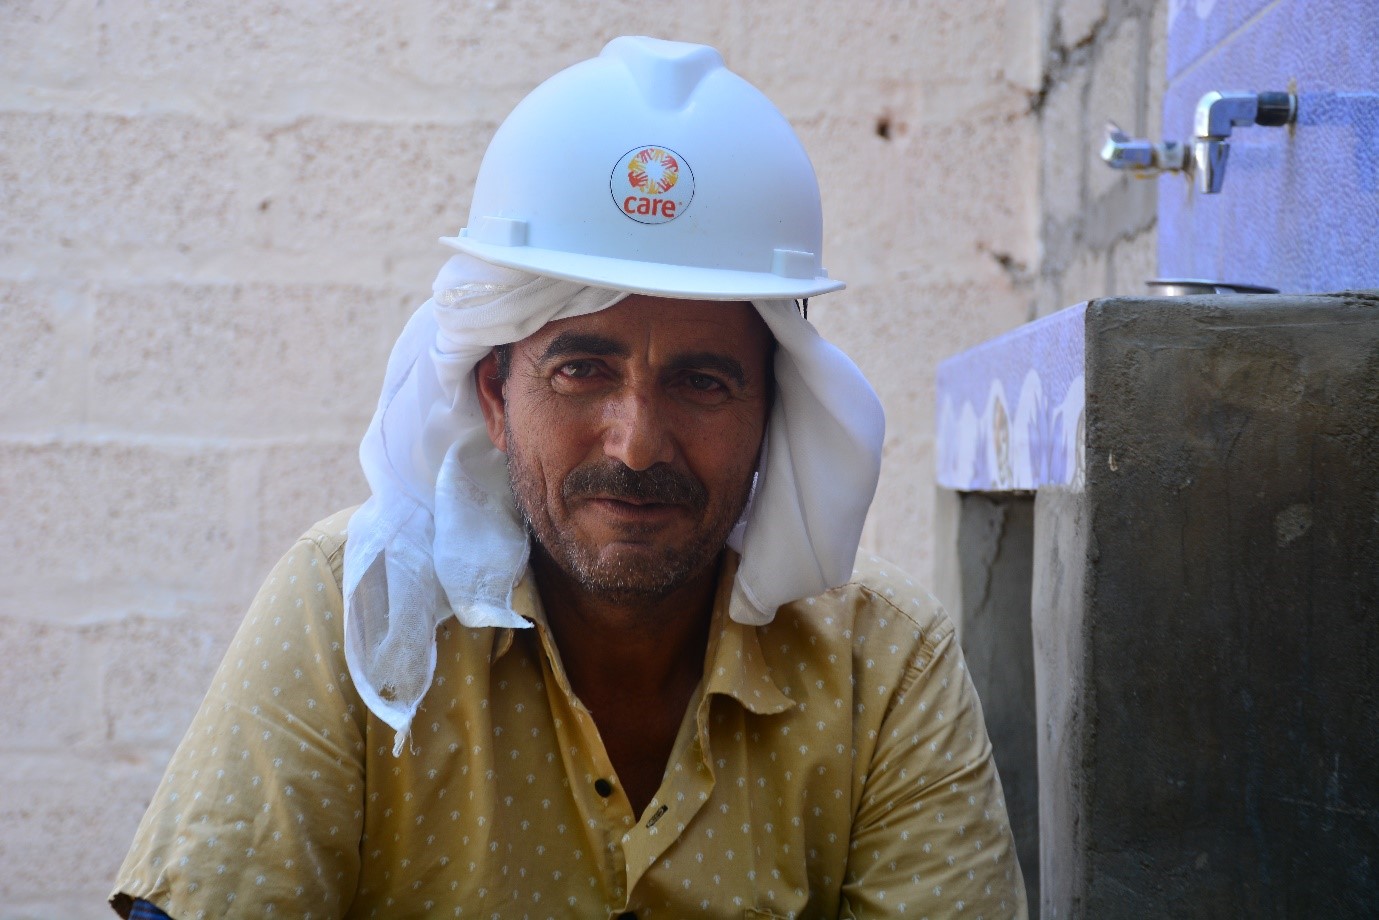 A man wearing a white helmet